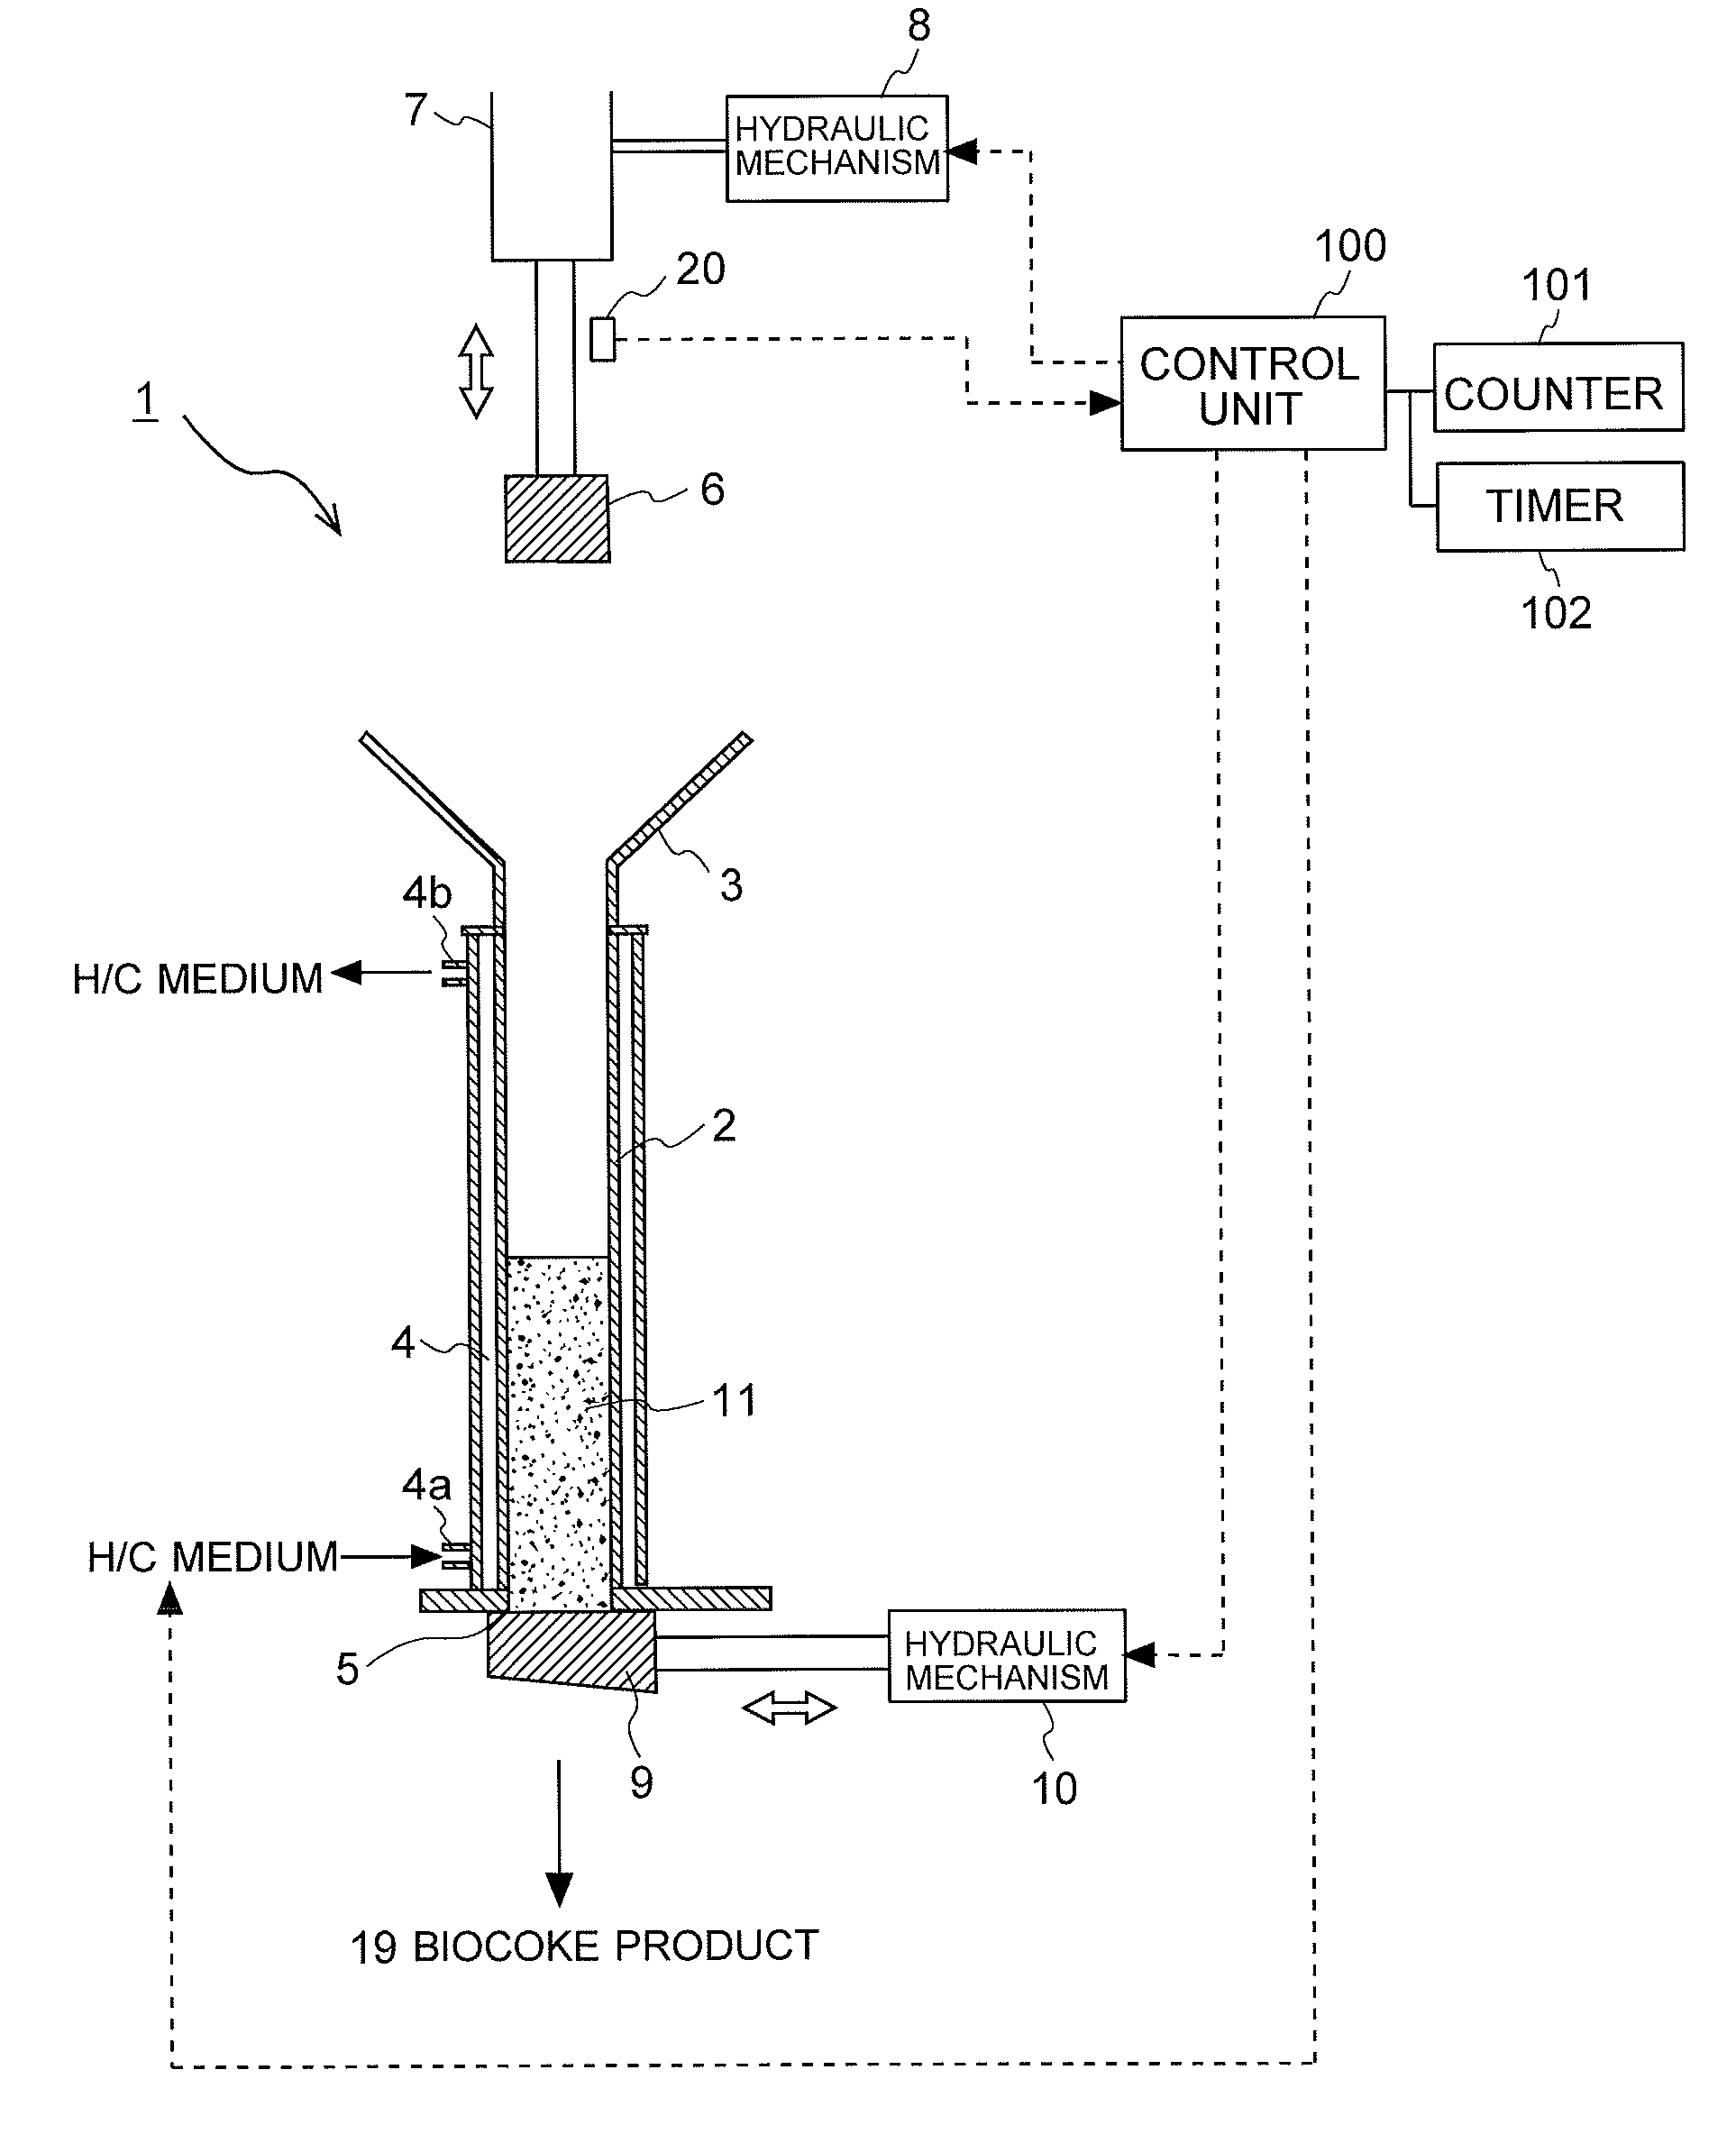 Biocokes producing method and apparatus